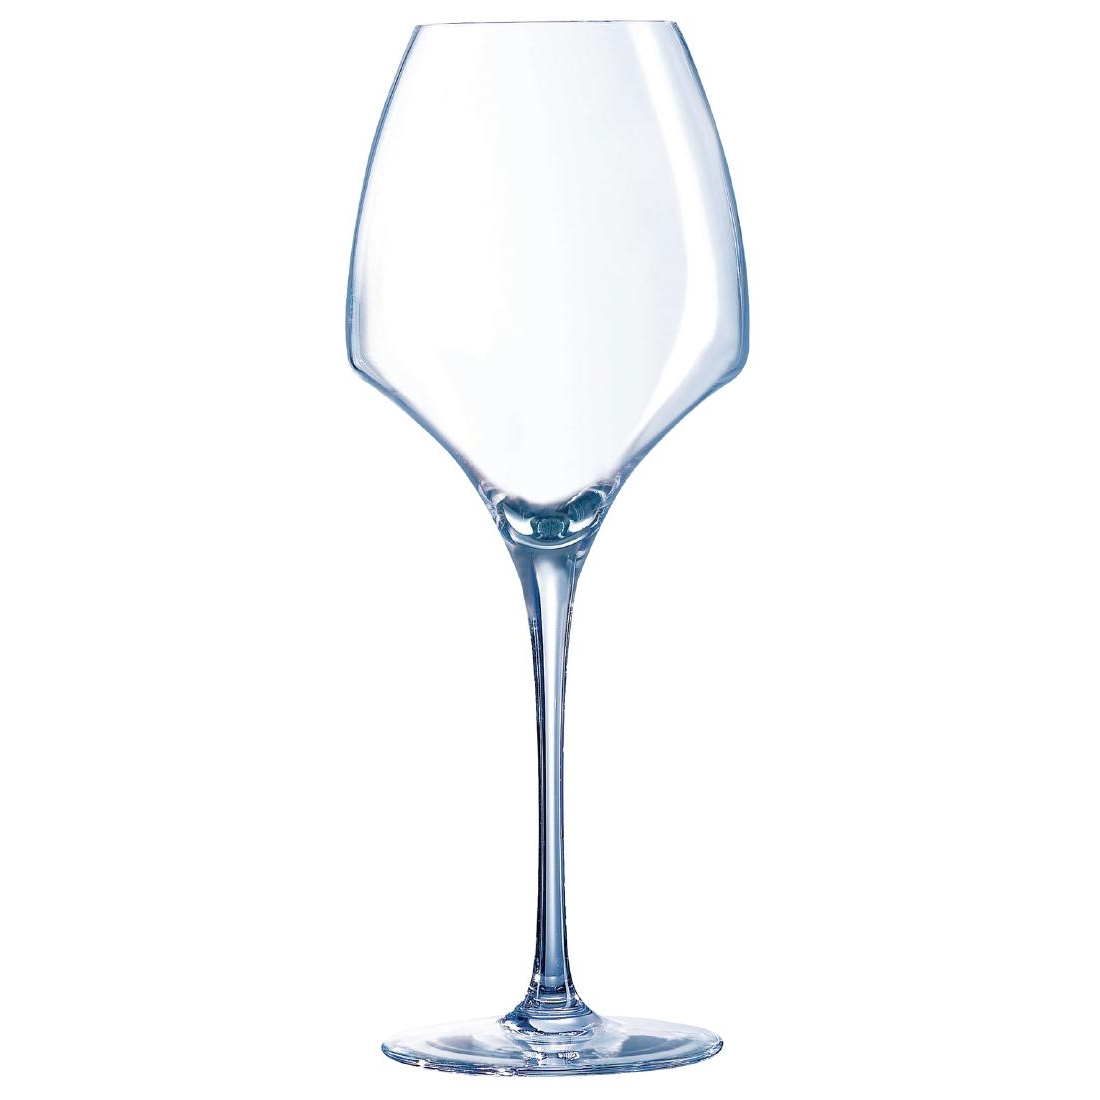 Chef & Sommelier Open Up Universal Wine Glasses 400ml